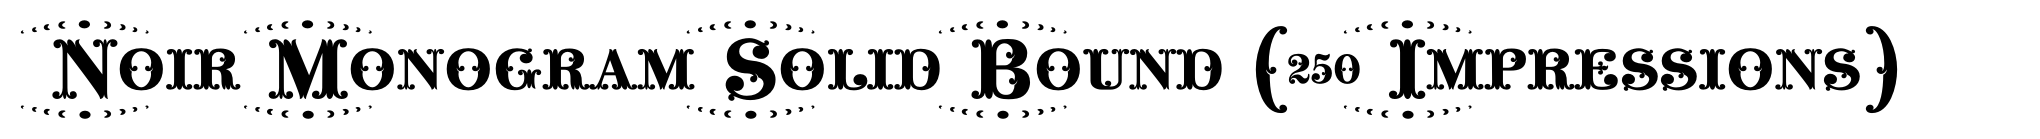 Noir Monogram Solid Bound (250 Impressions) image